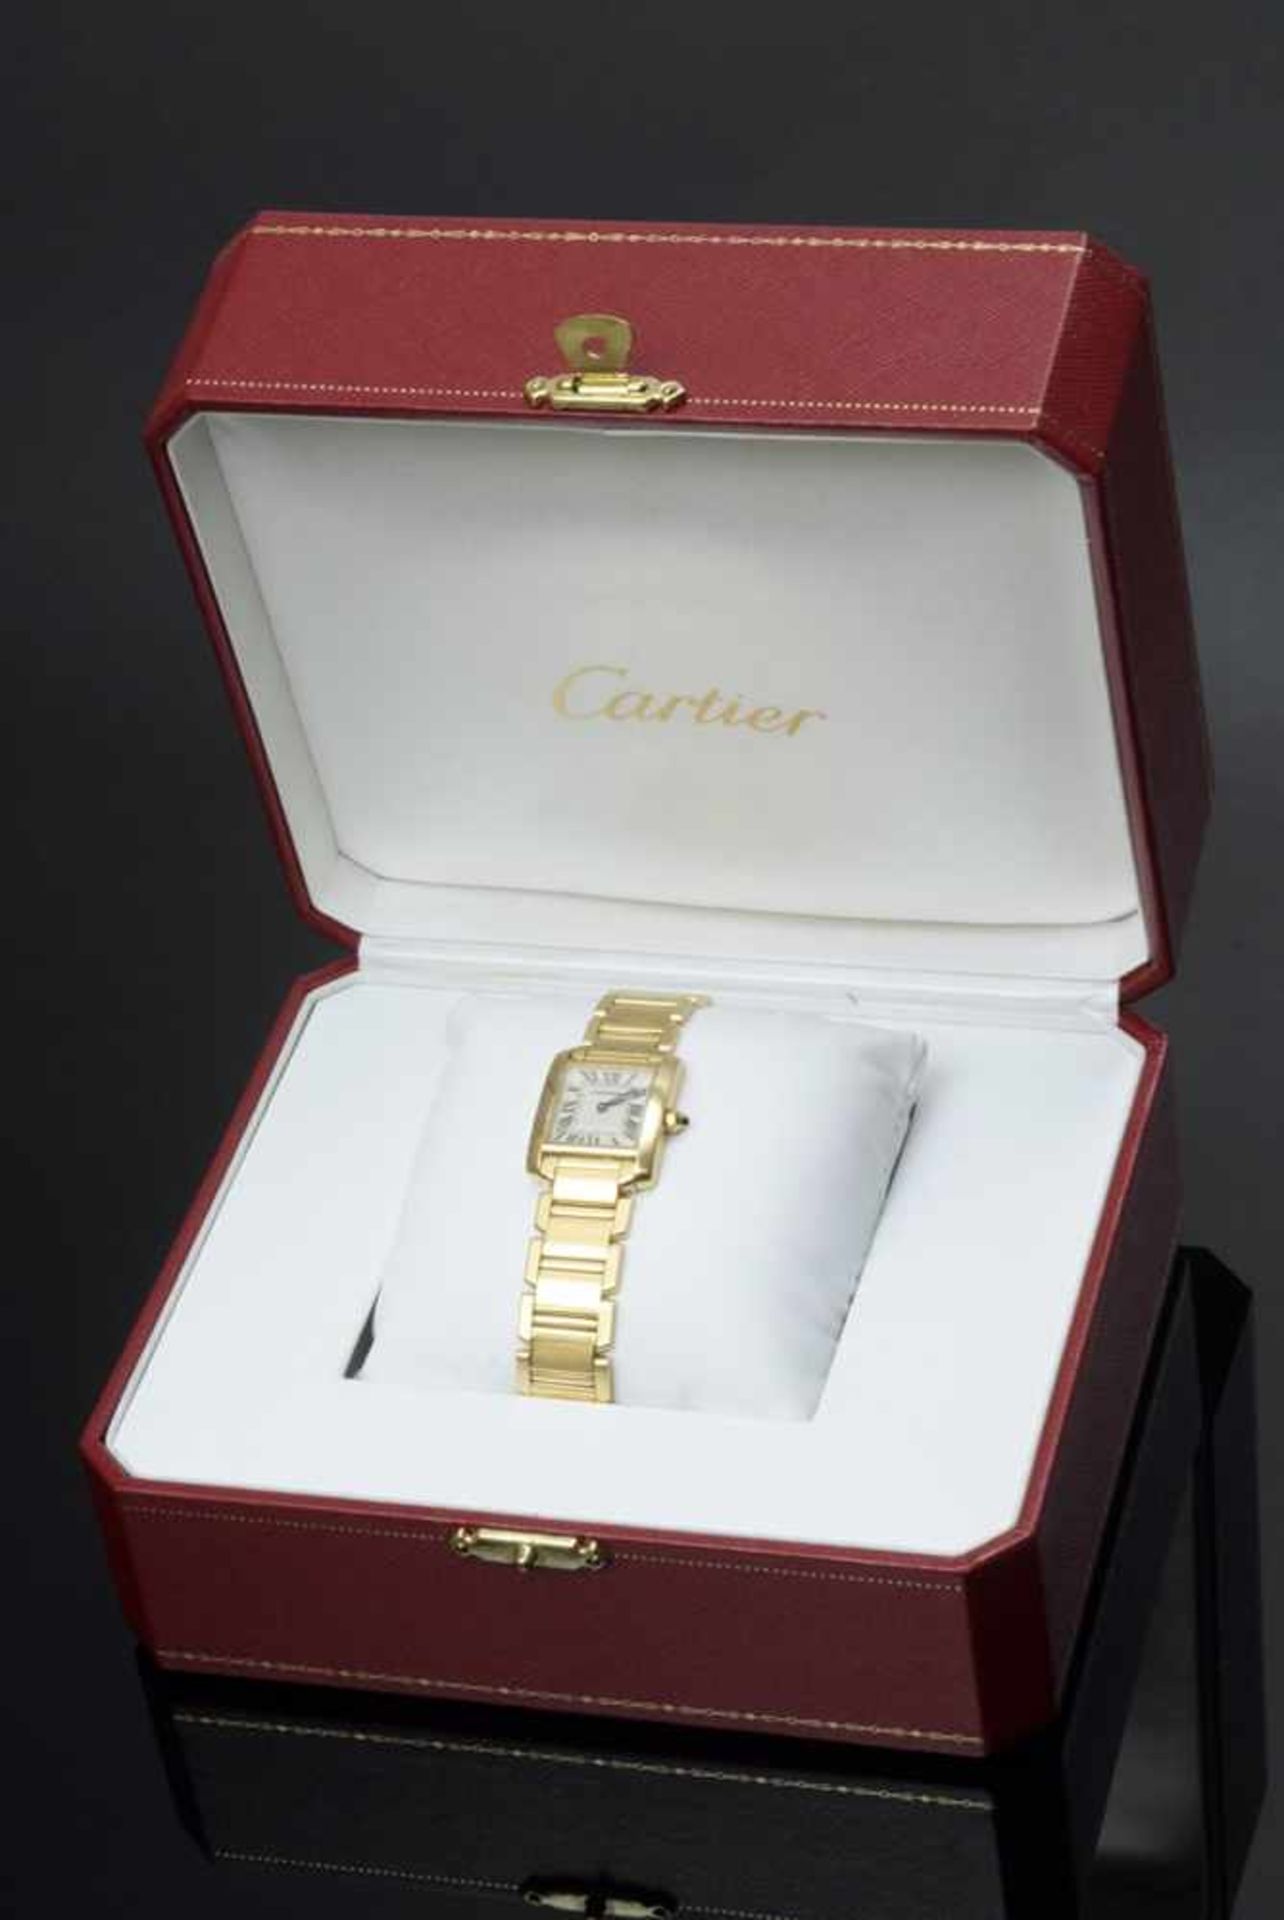 GG 750 Cartier "Tank Française" ladies' watch, quartz movement, dial with roman numerals, - Image 5 of 6